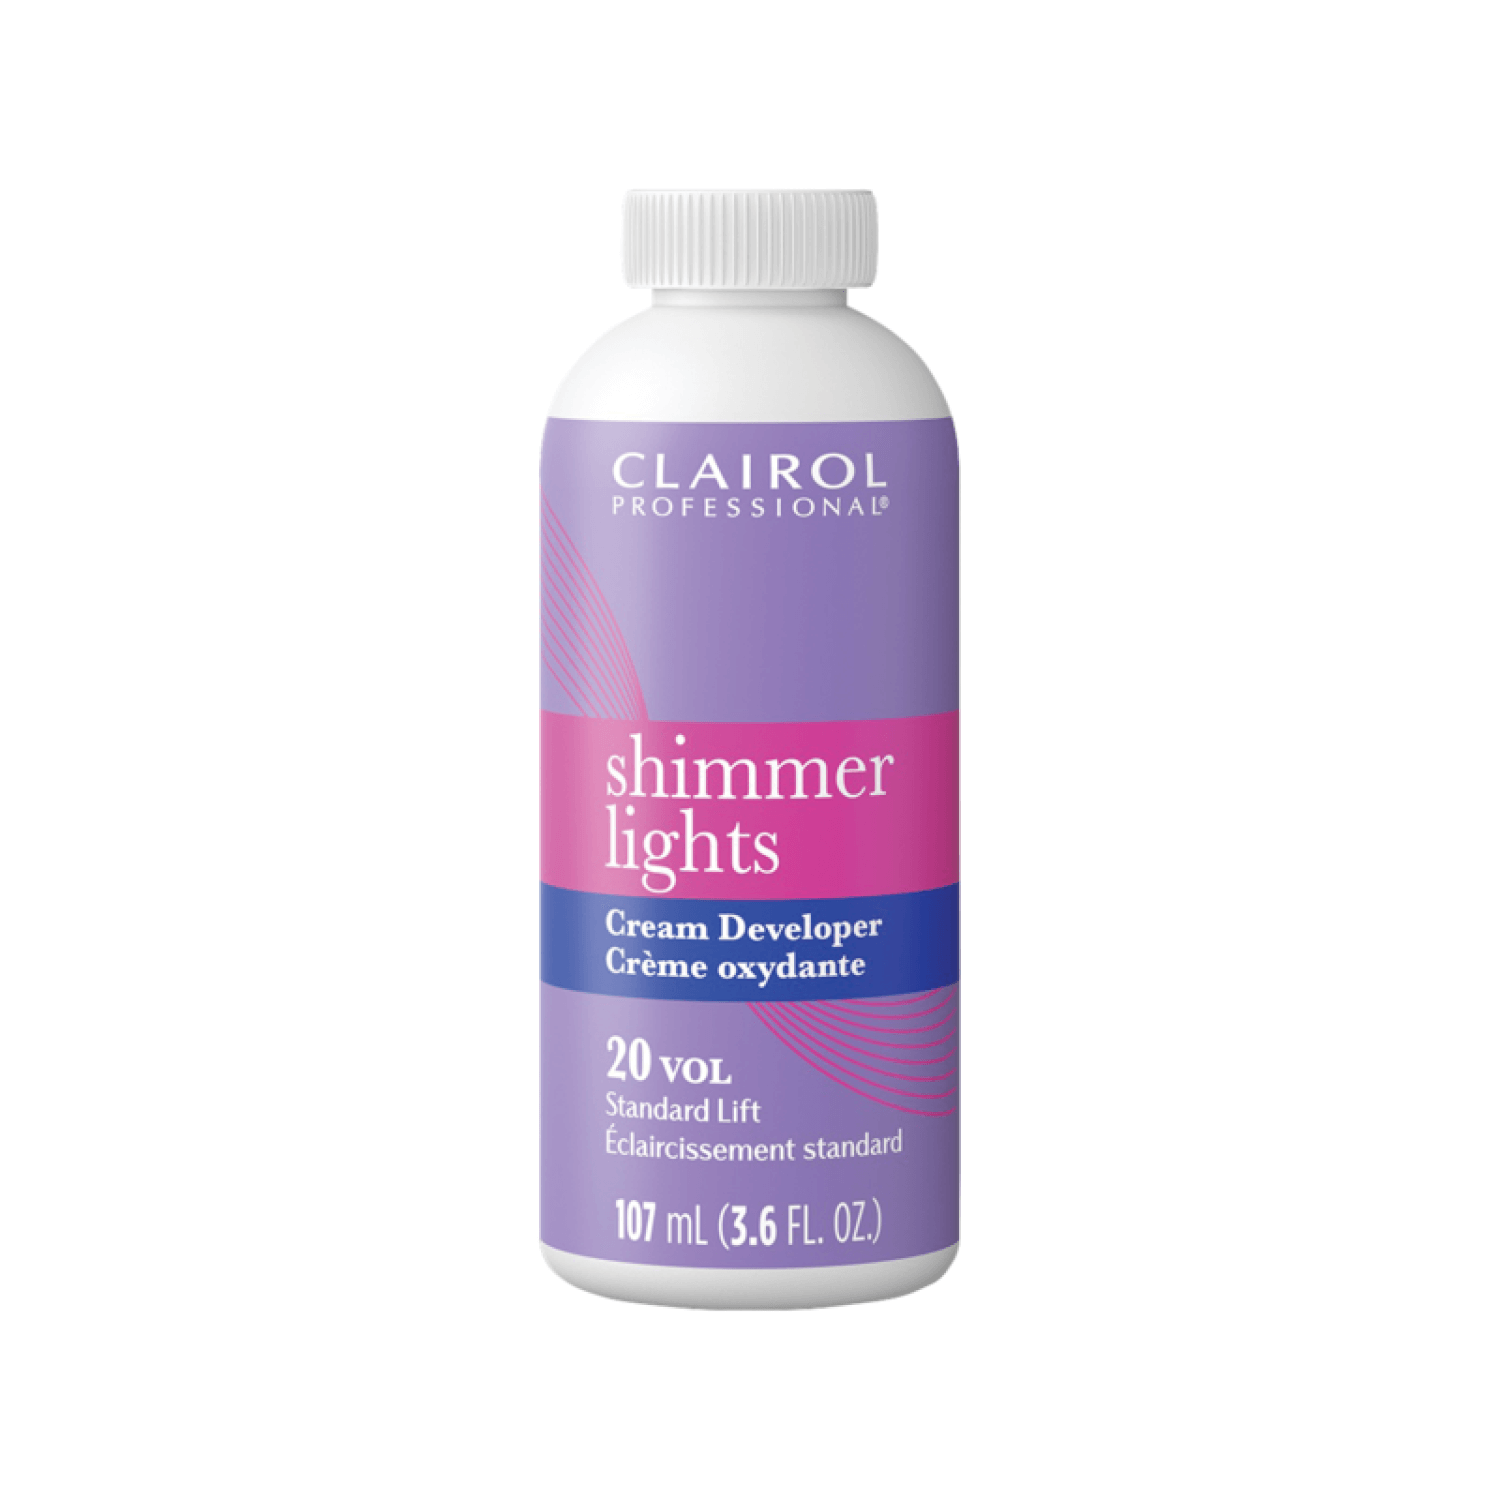 Clairol Professional Shimmer Lights 20 volume Cream